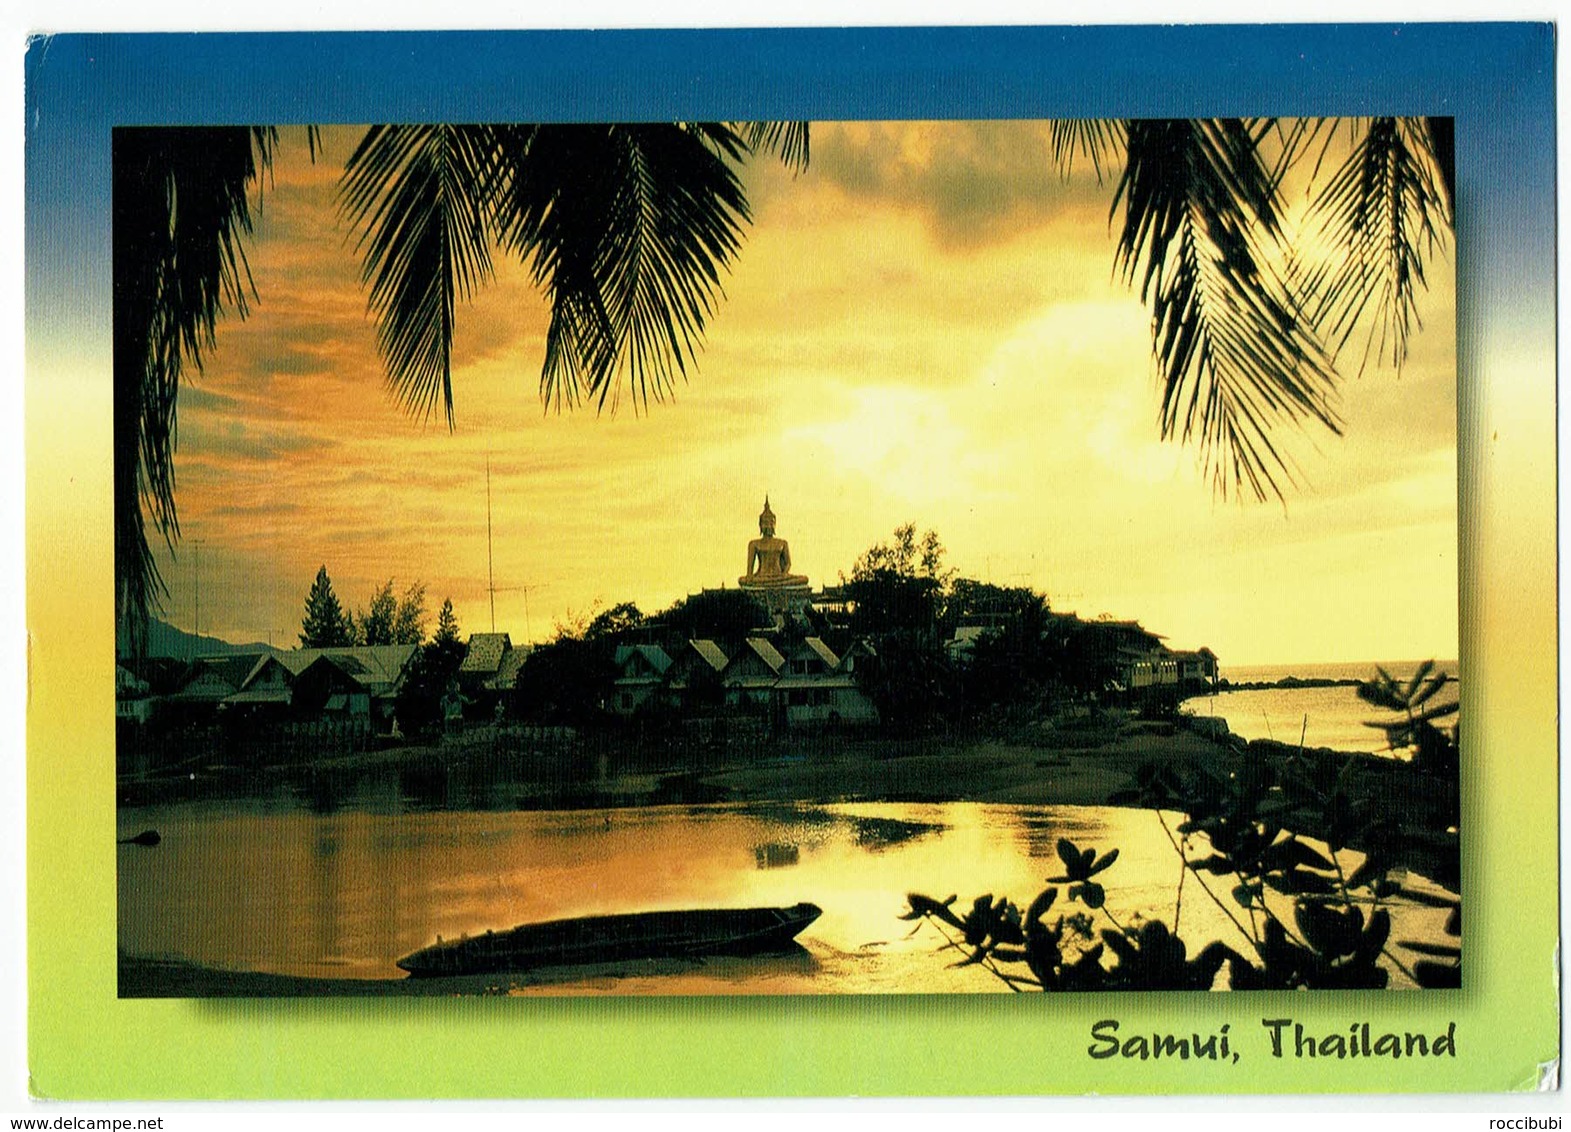 Thailand, Samui - Thailand